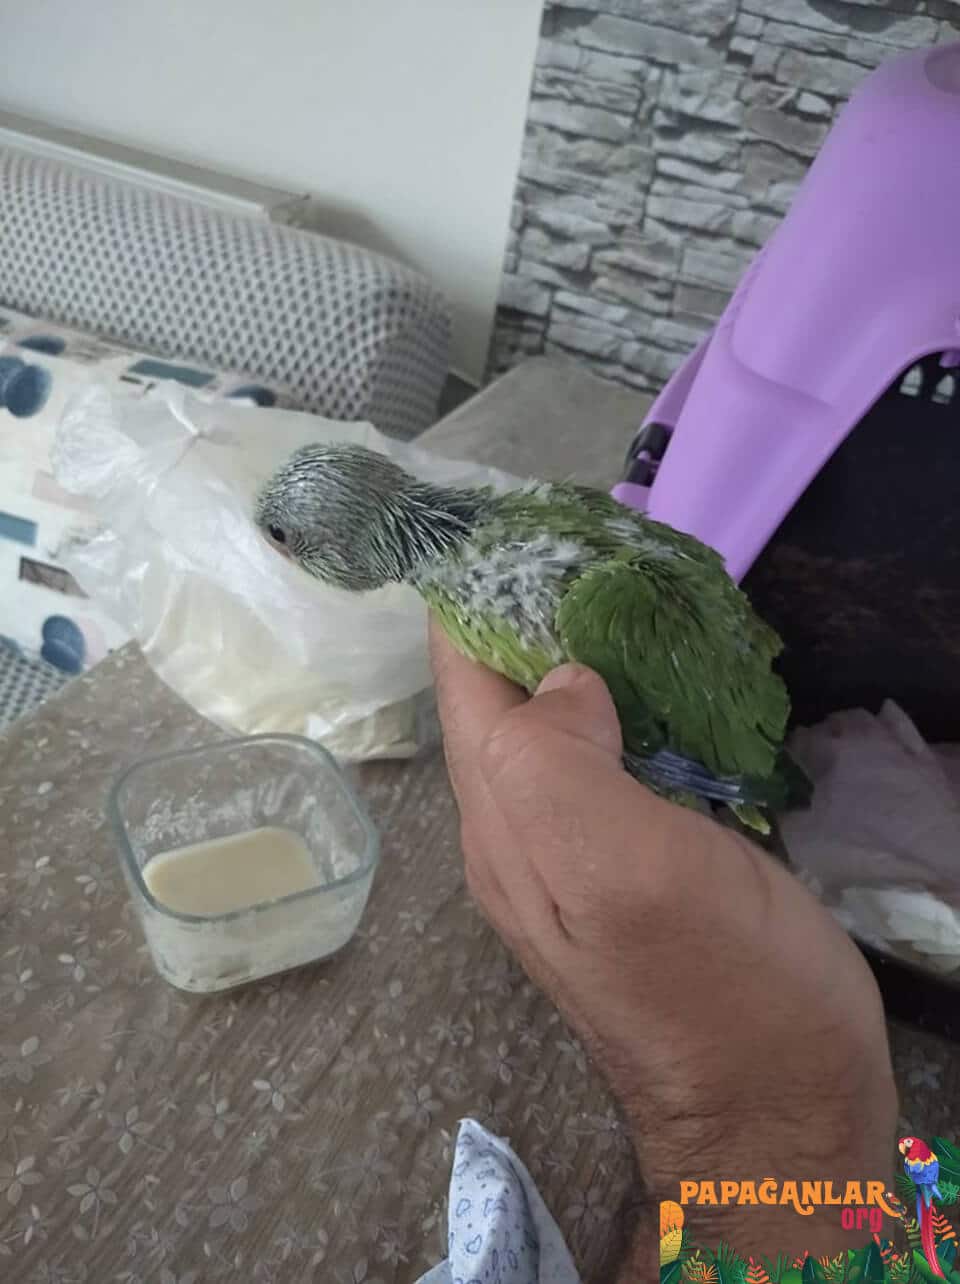 Alexander parrot prices 2019